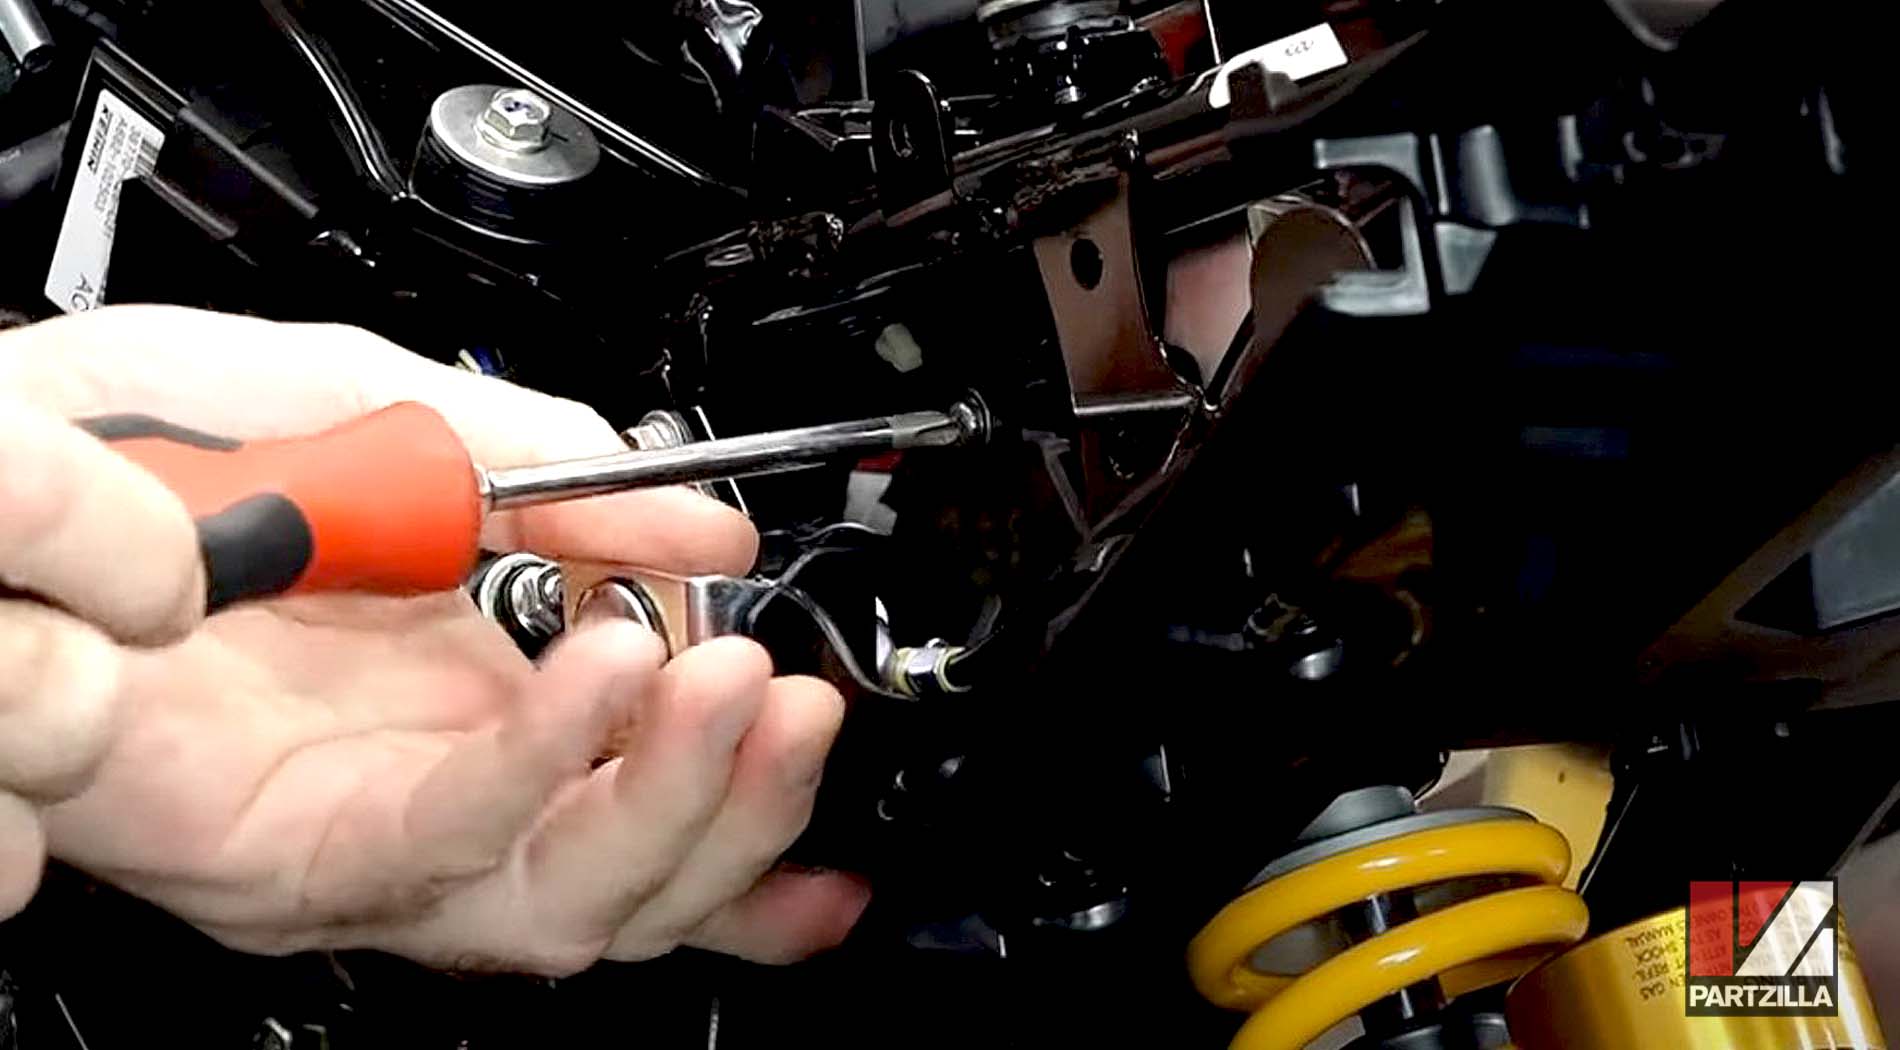 2018 Honda Grom ABS 125 aftermarket suspension upgrades shock absorber installation